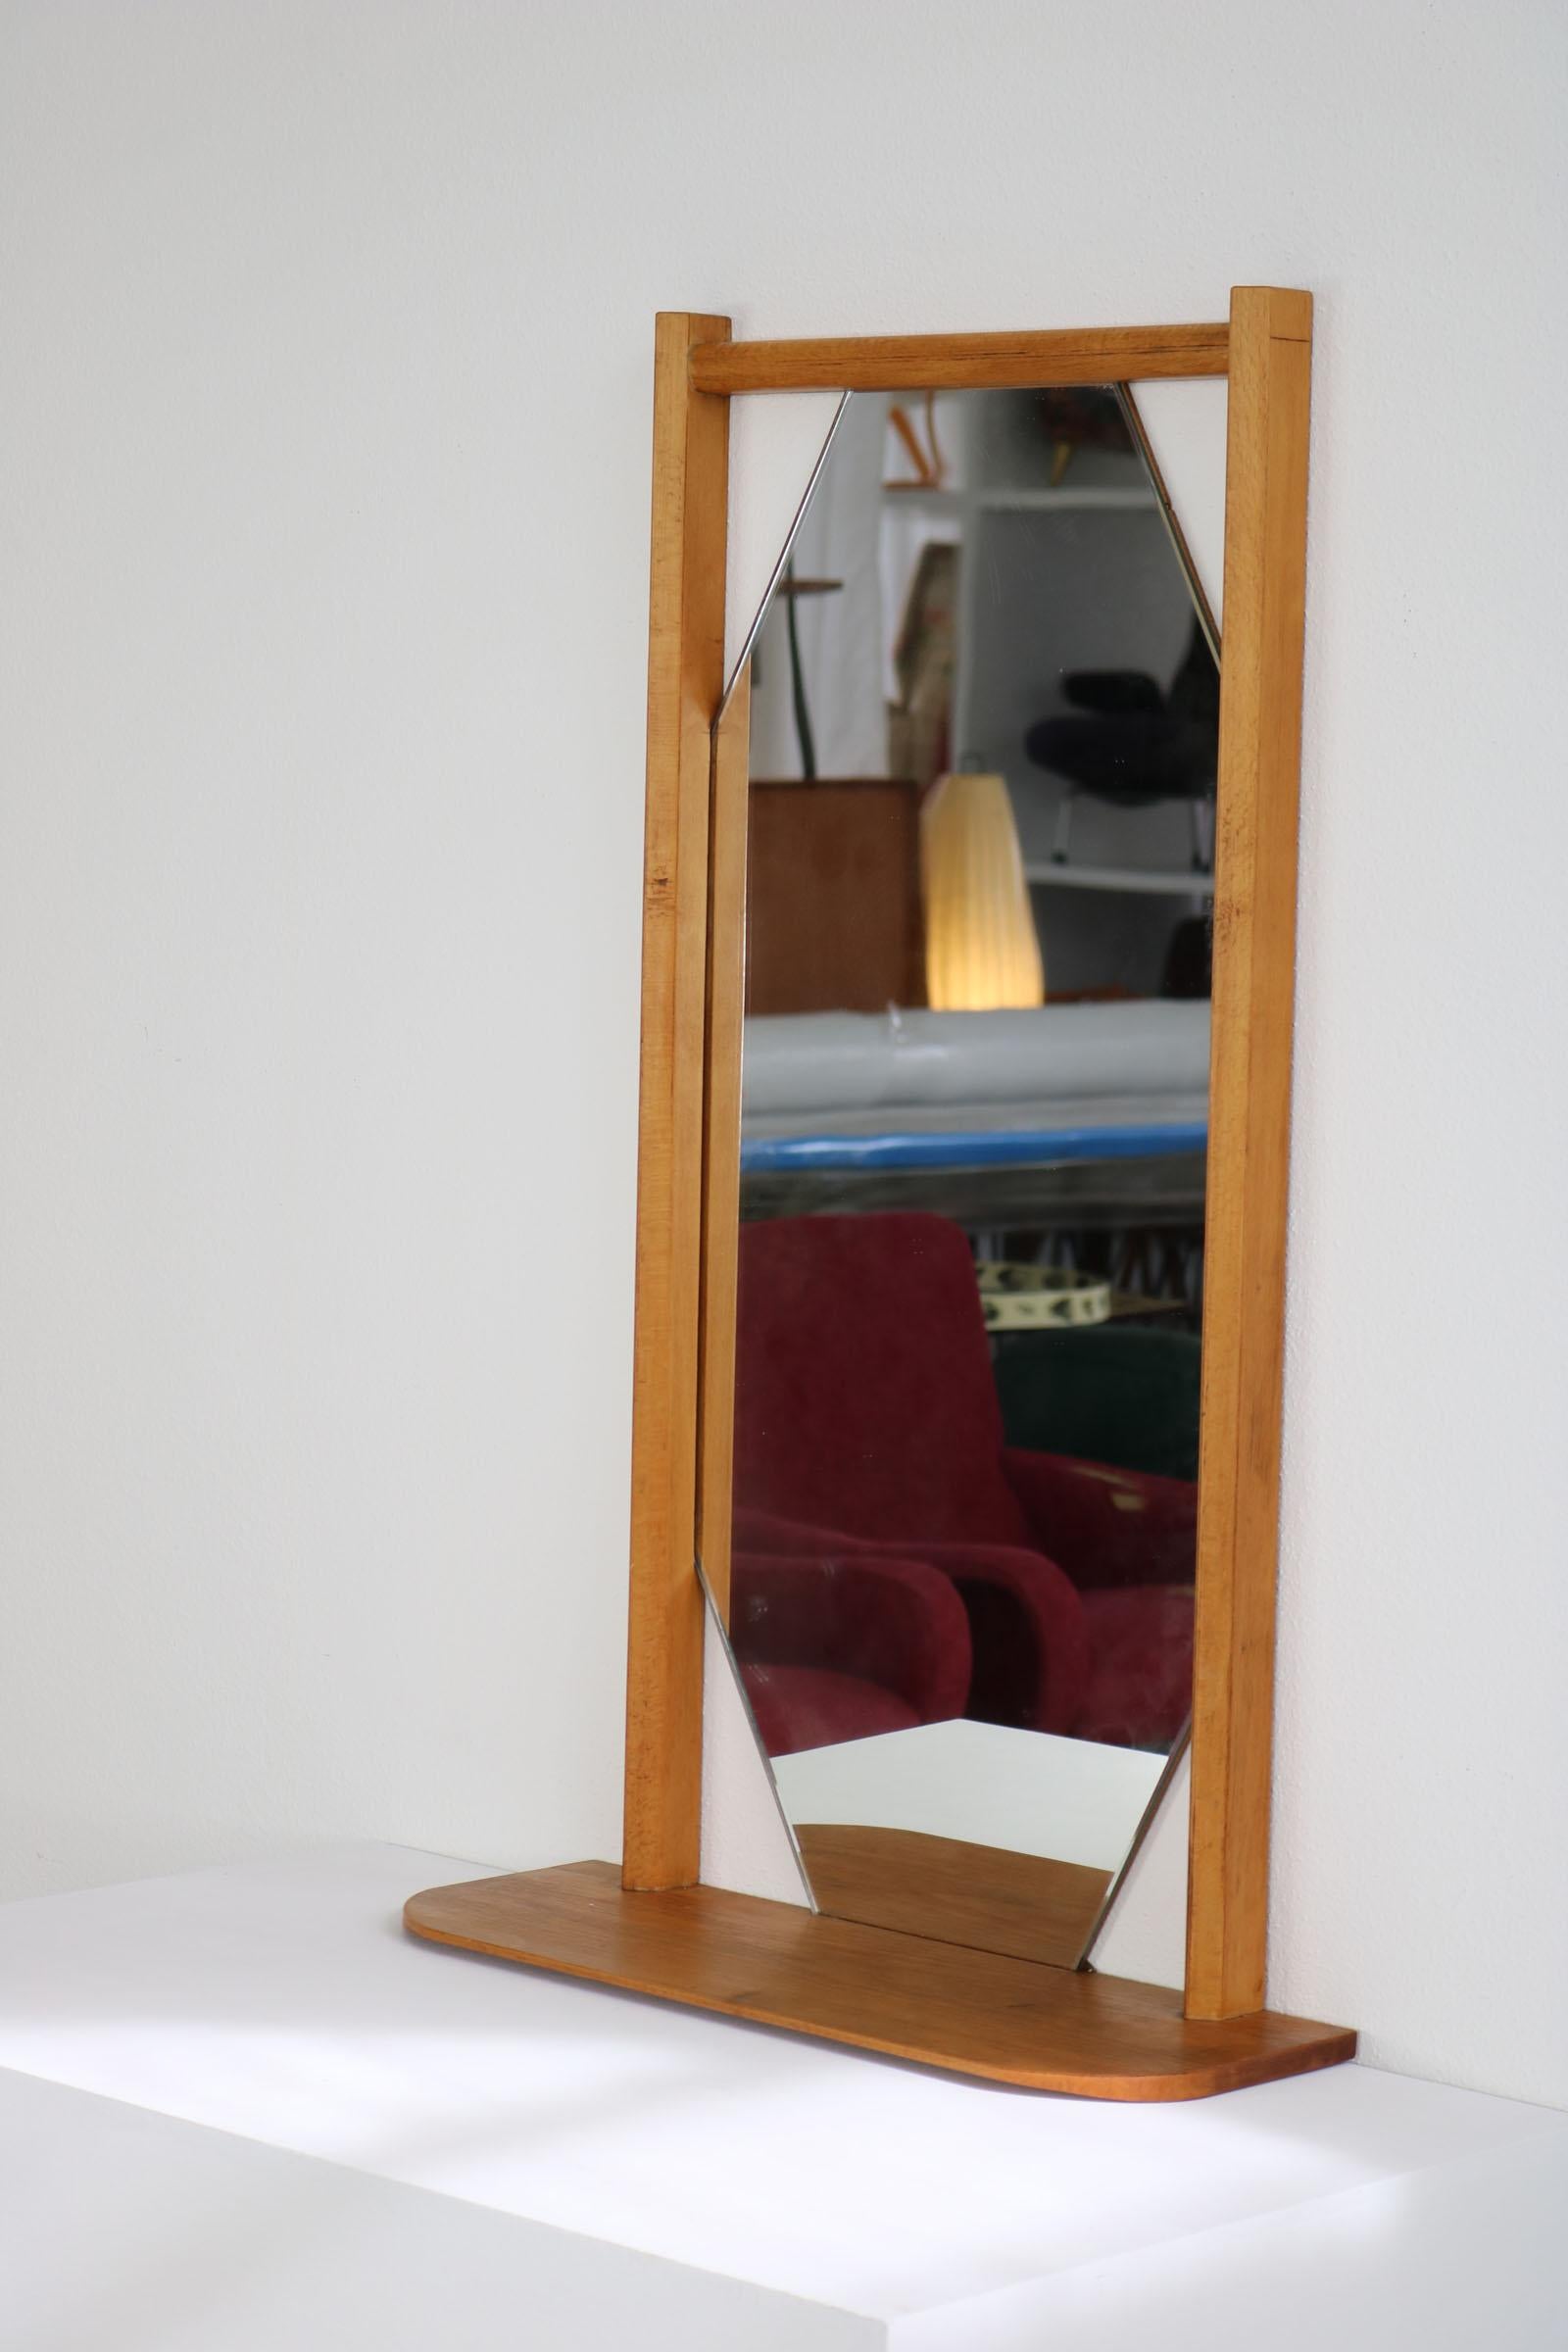 Beechwood Framed, Hexogan Shaped Italian Wall Mirror with Shelf, 1960s For Sale 6